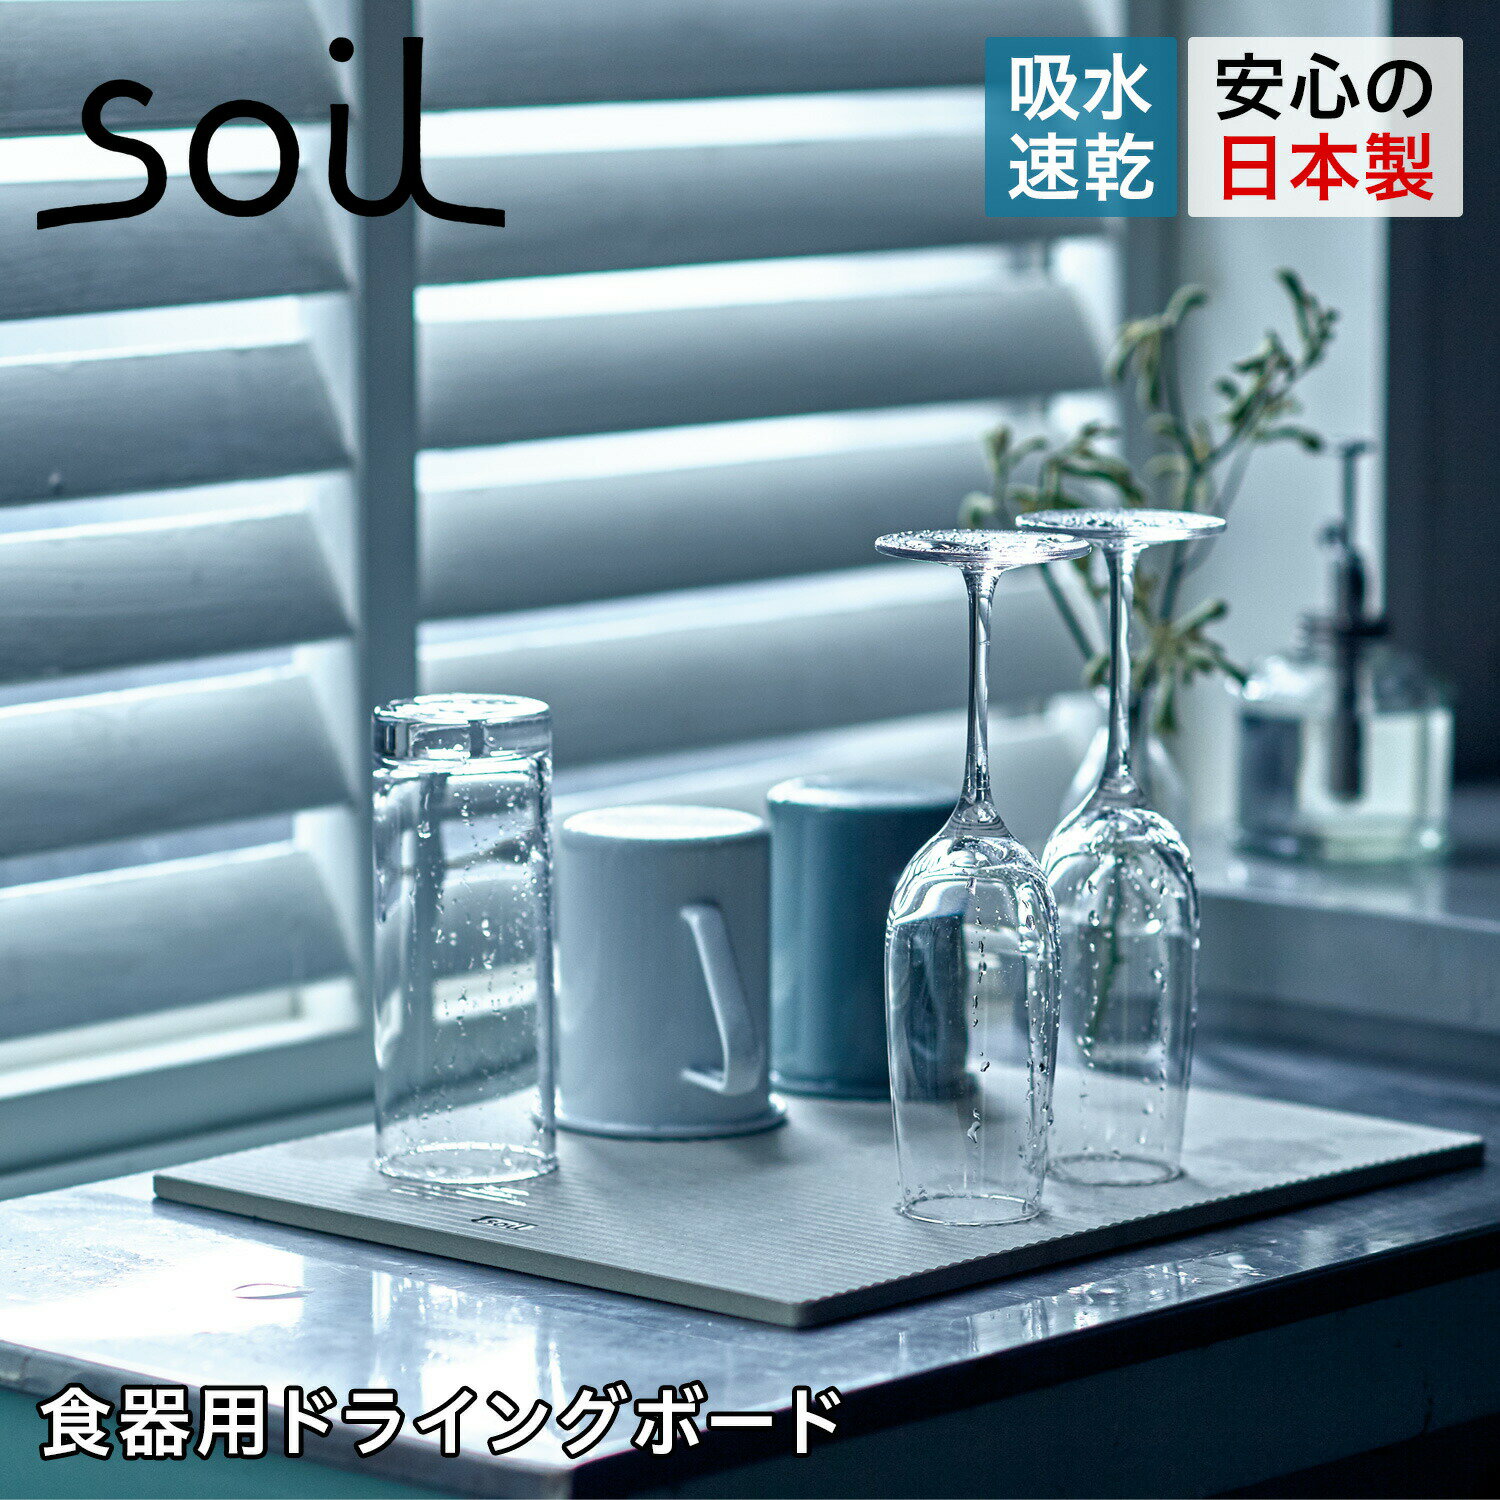 soil K393 ソイル 水切りマット 珪藻土 ドライビングボード ライト M 速乾 ノンアスベスト 日本製 DRYING BOARD LIGHT